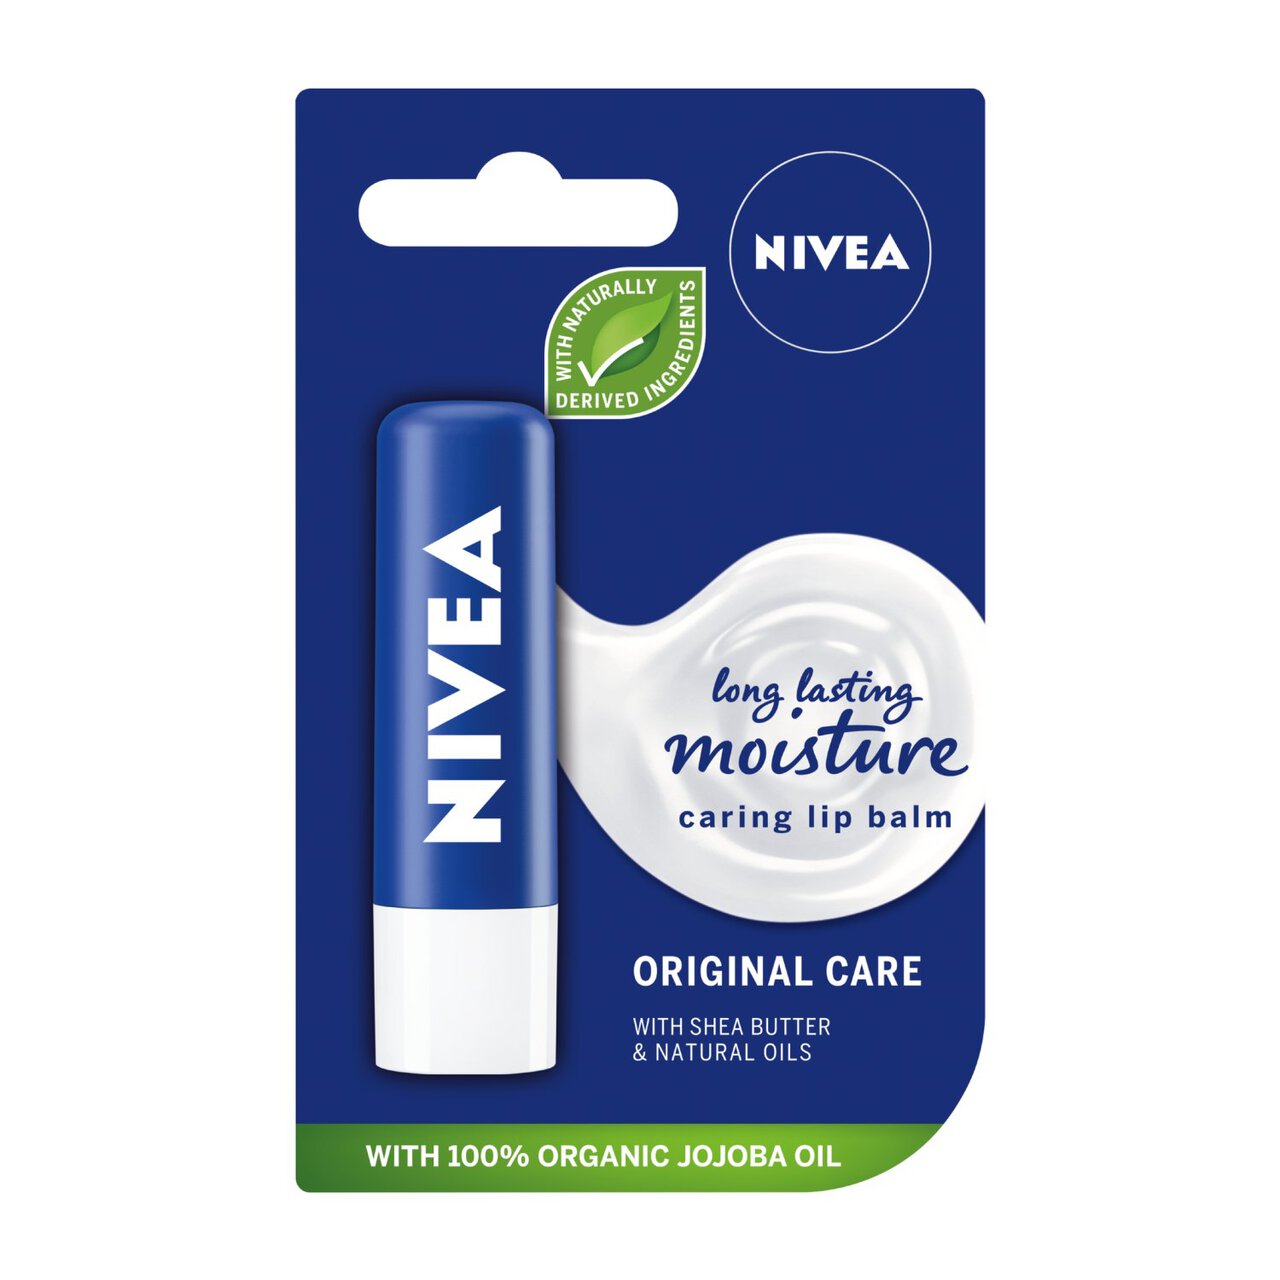 NIVEA Original Care Lip Balm 4.8g